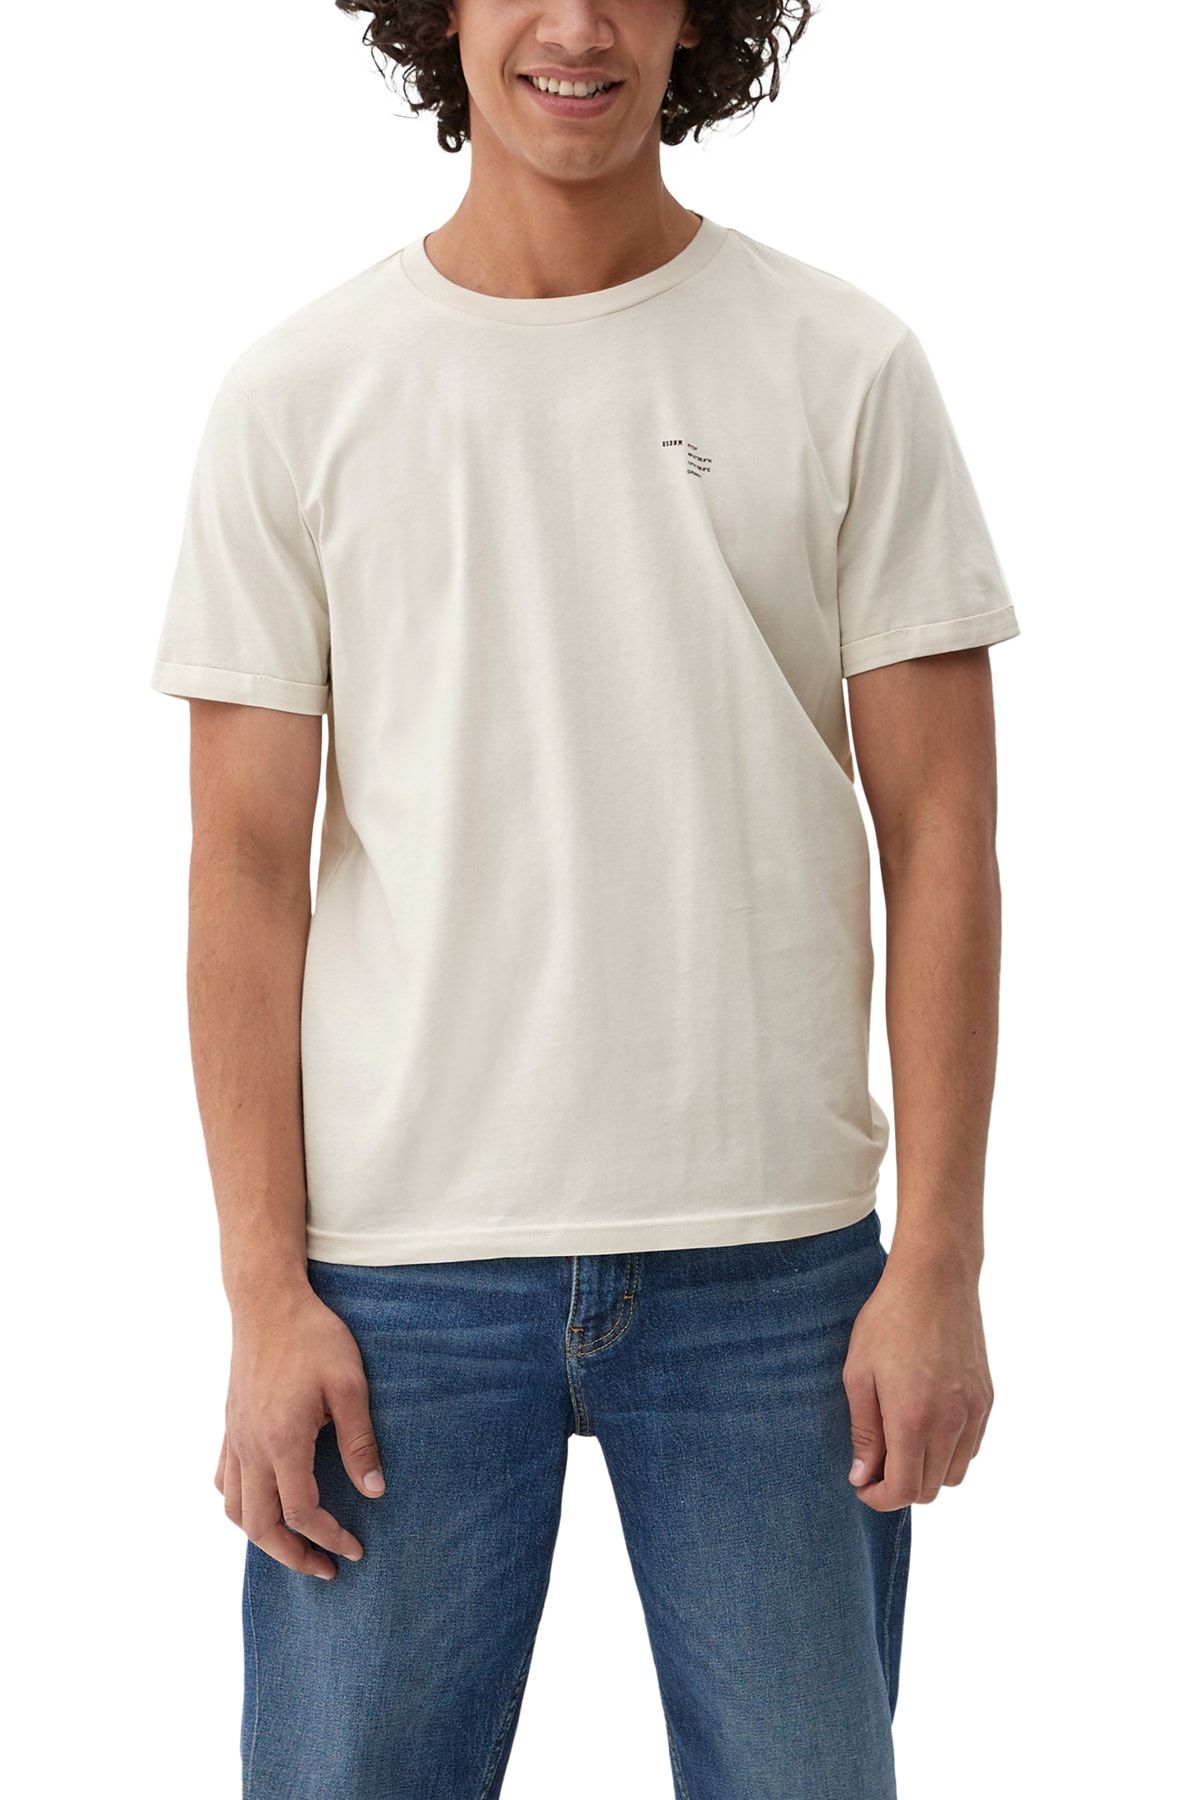 QS by s.Oliver T-Shirt - White - Regular fit - Trendyol